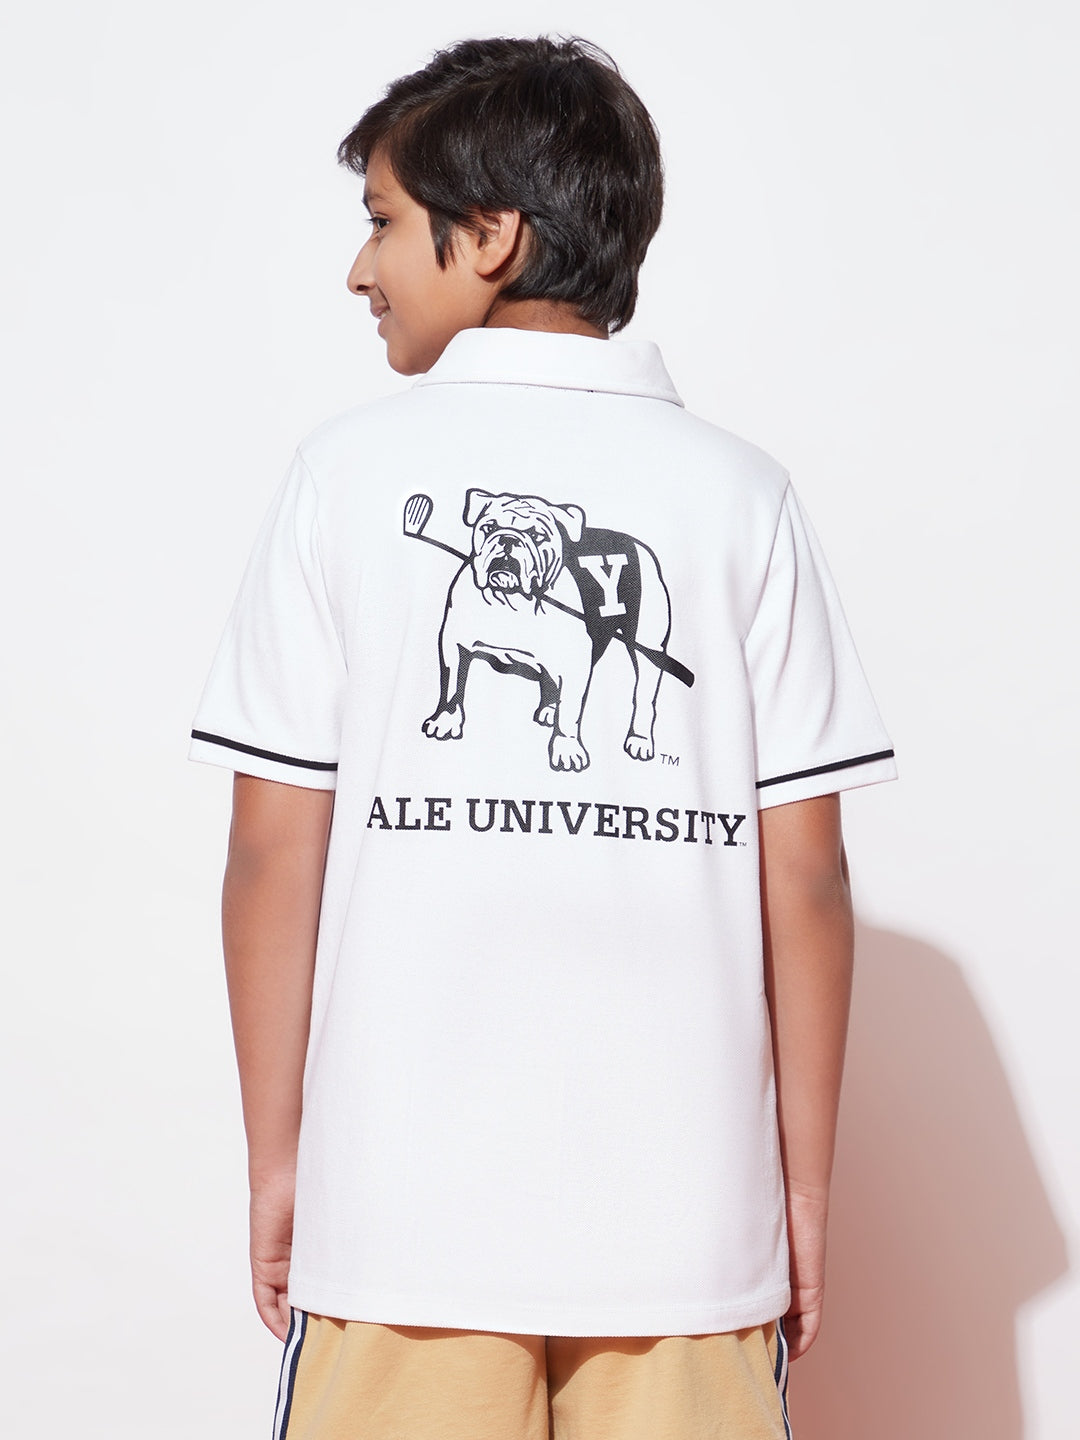 Teen Boy Yale University Half Sleeved White Polo T-Shirt